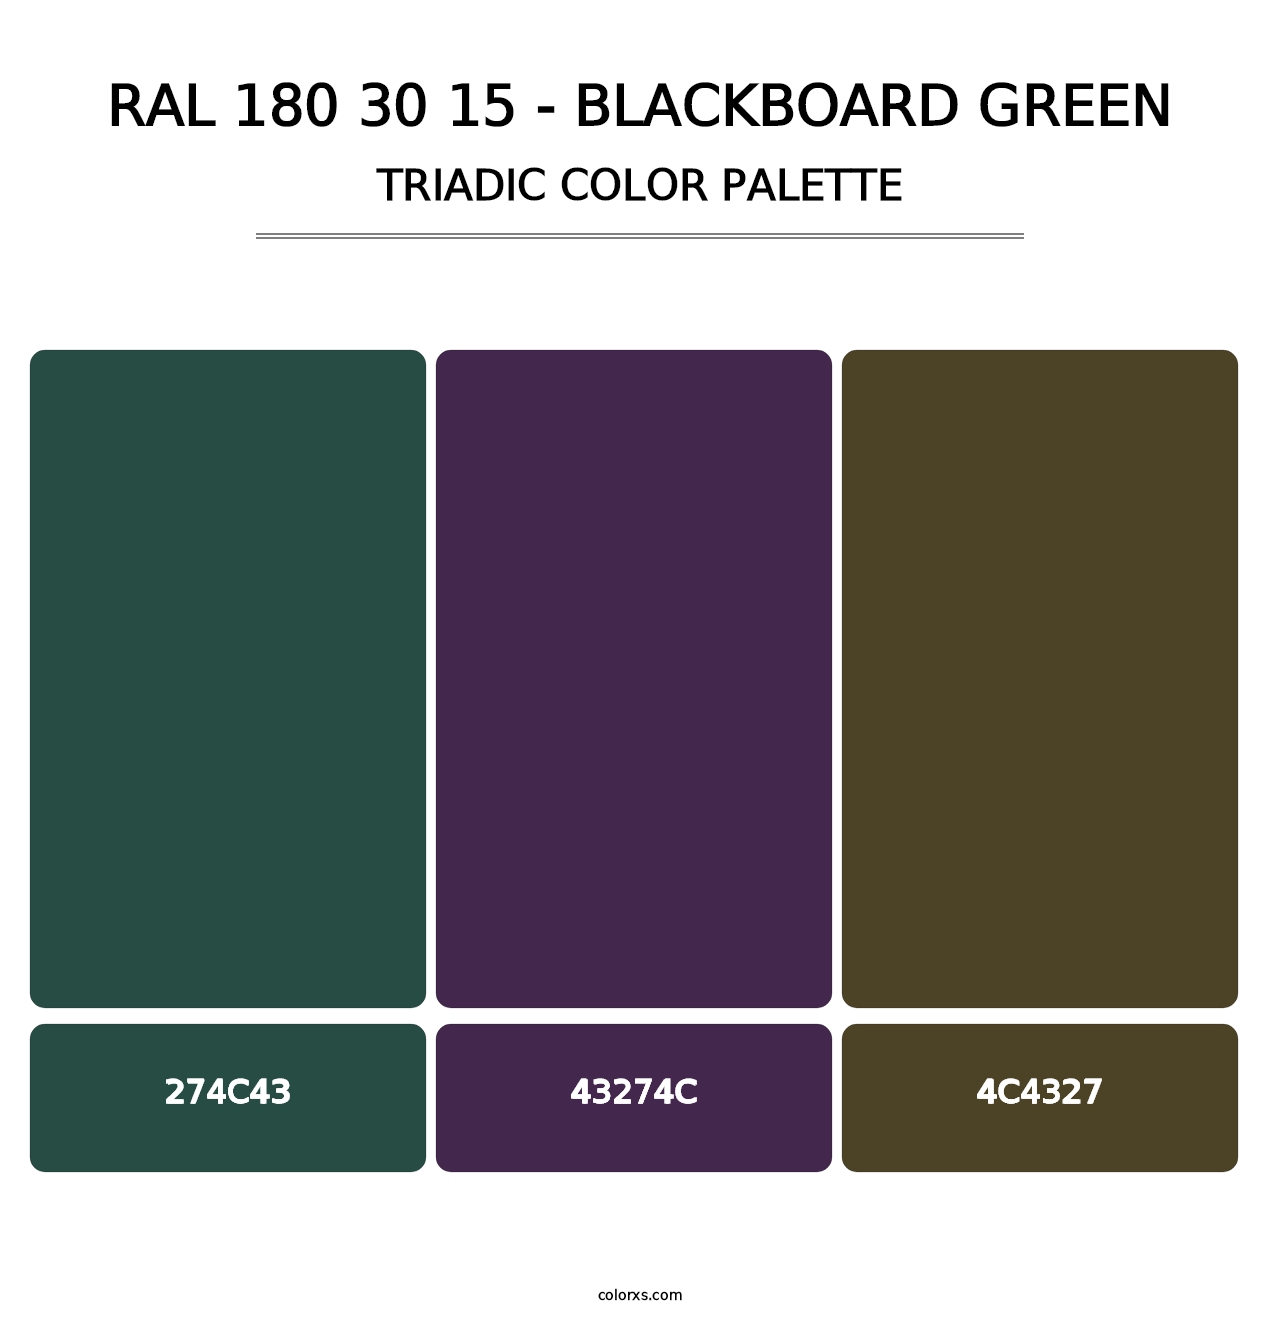 RAL 180 30 15 - Blackboard Green - Triadic Color Palette